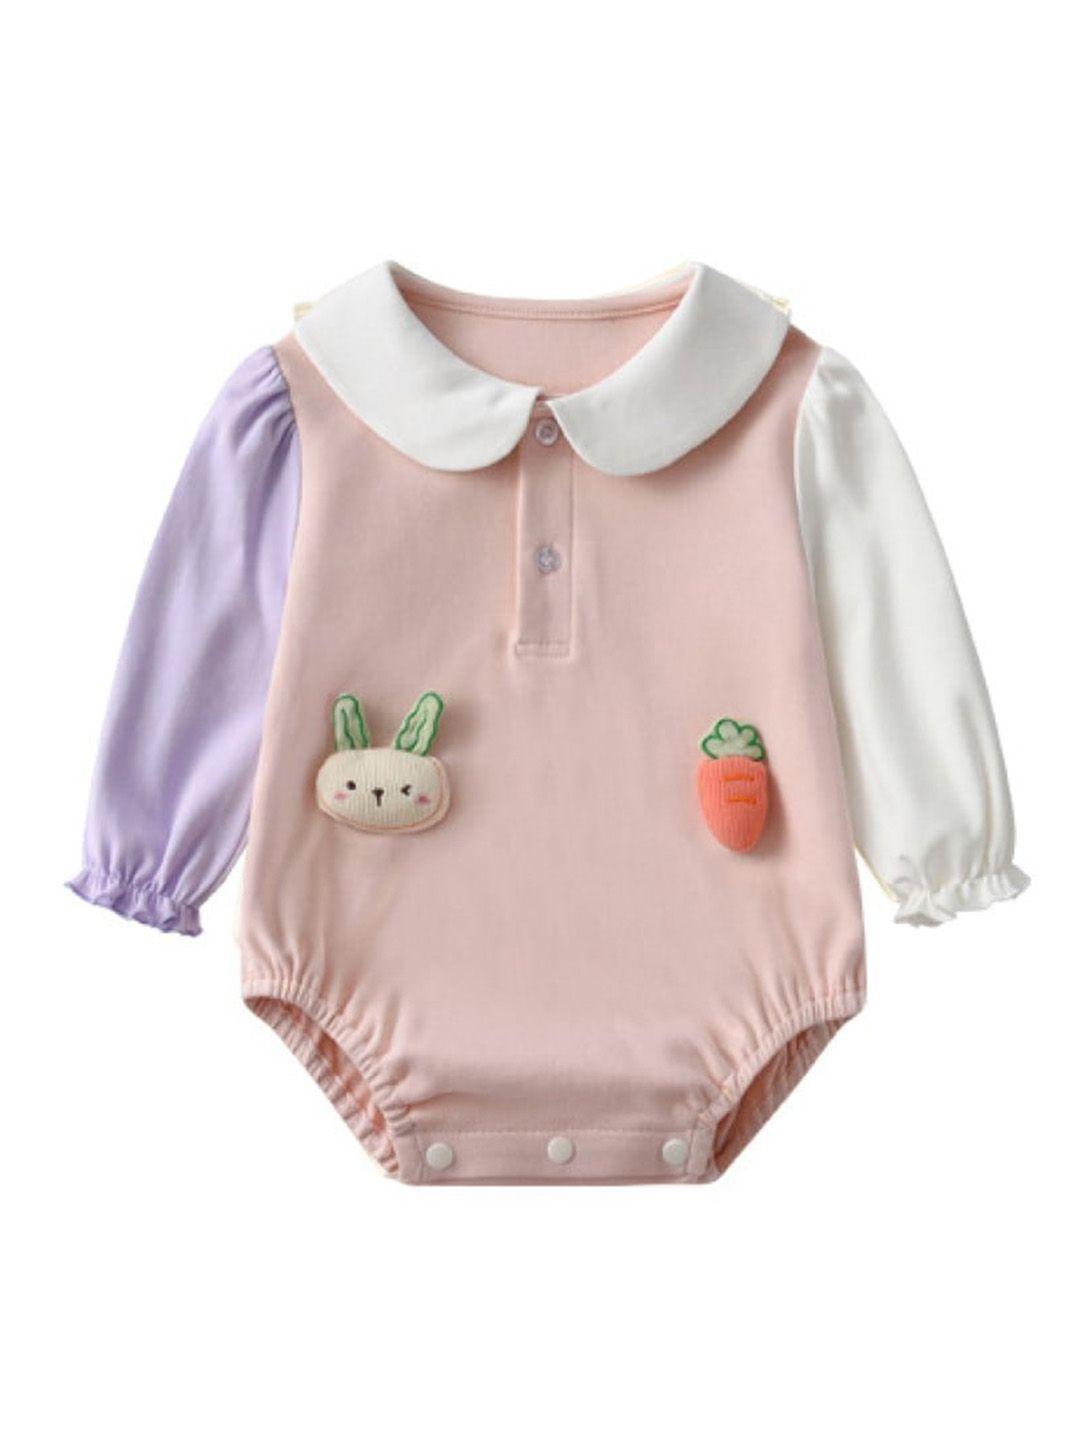 StyleCast Pink Infants Girls Self Design Cotton Romper